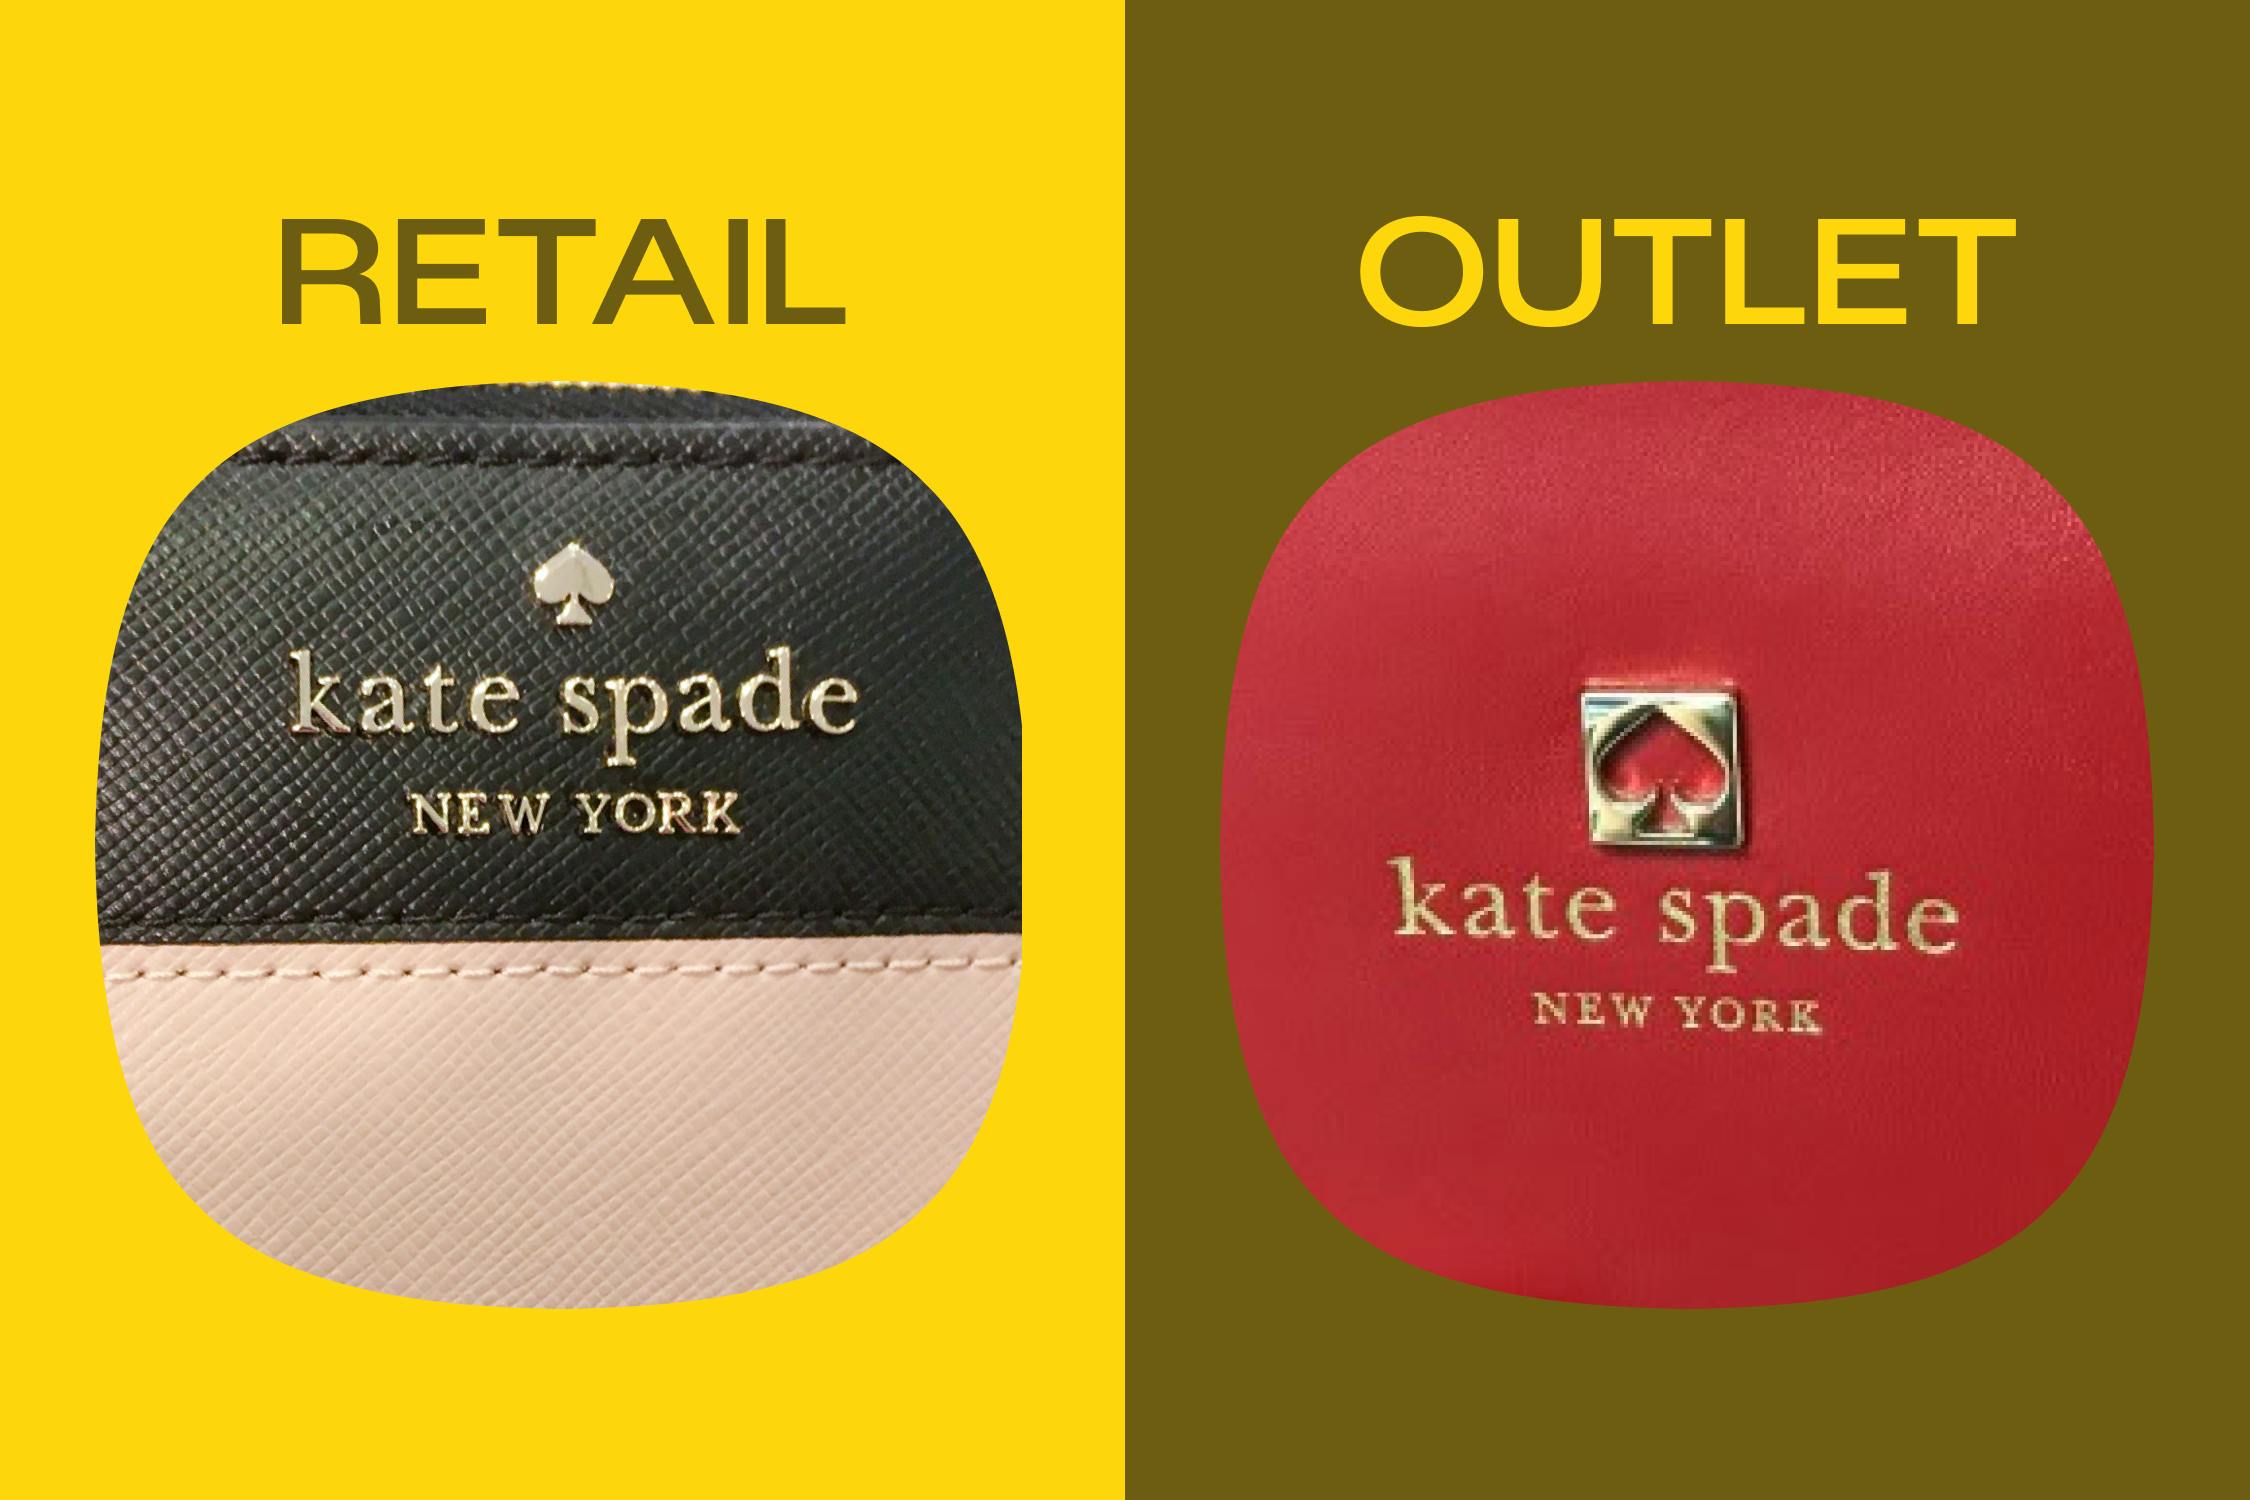 kate spade outlet vs retail logo